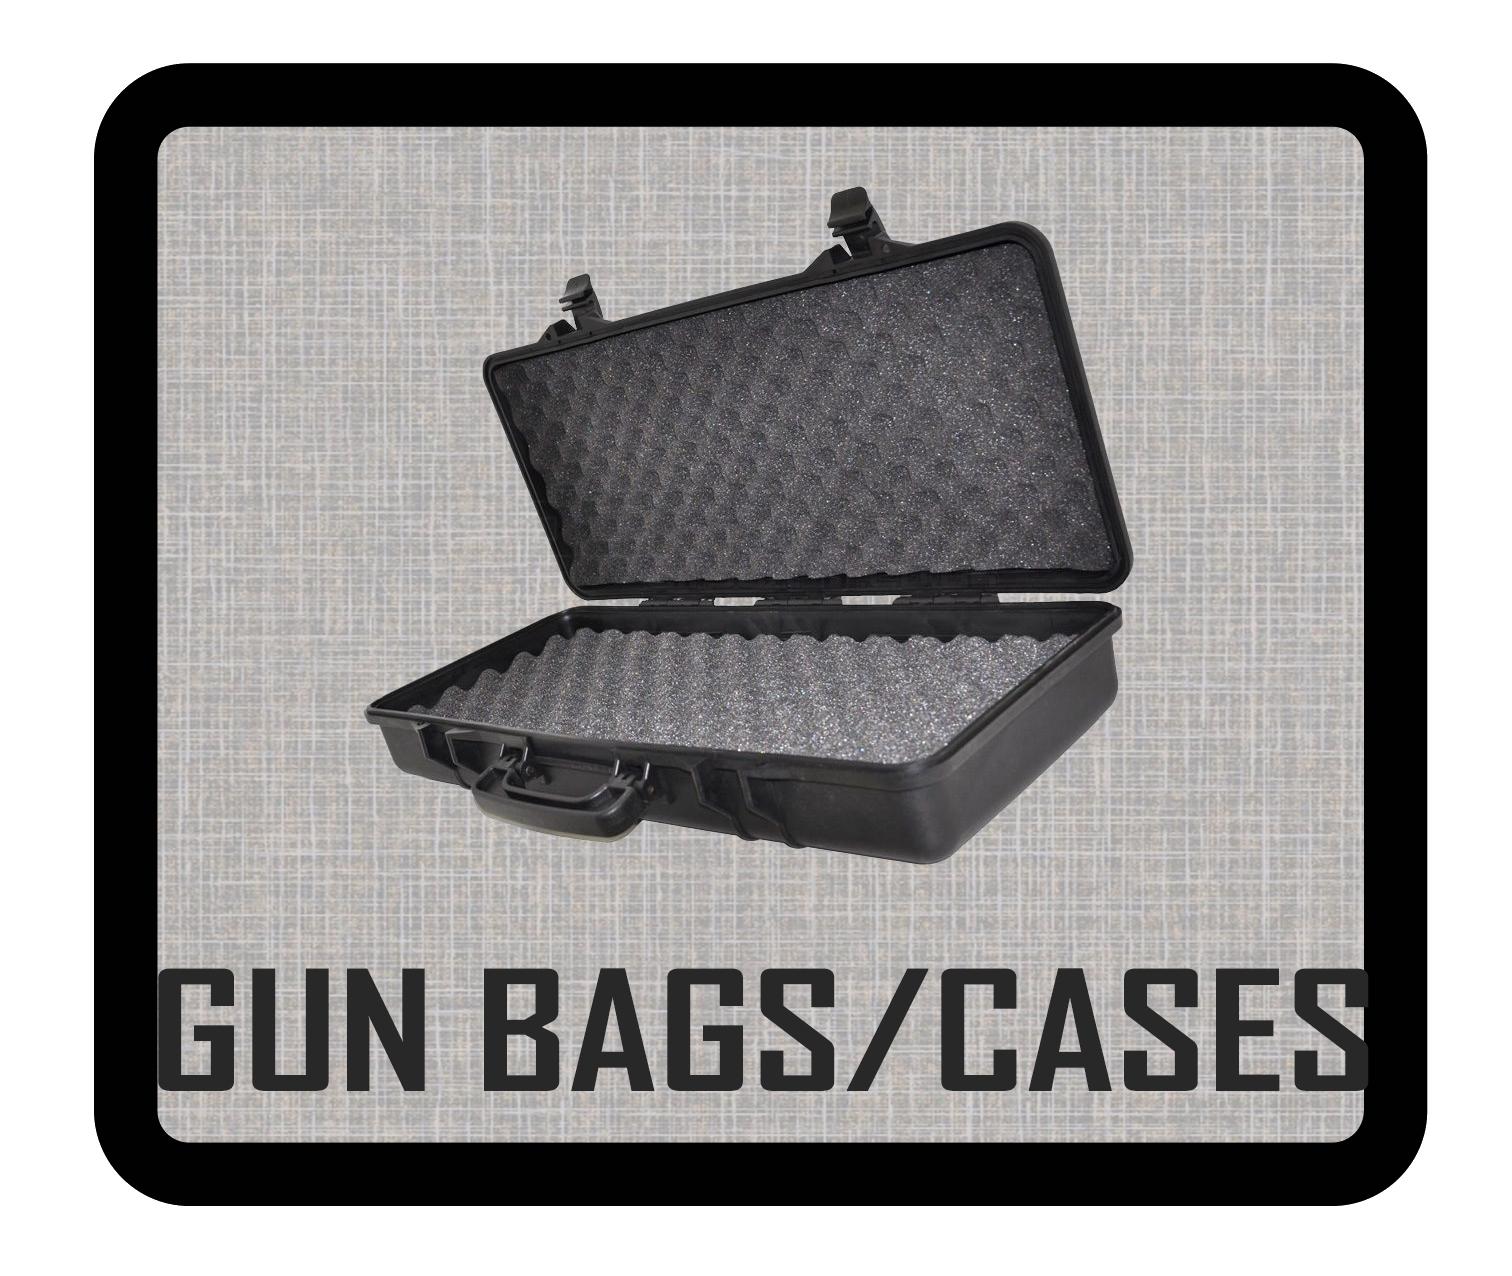 GUN BAGS / CASES